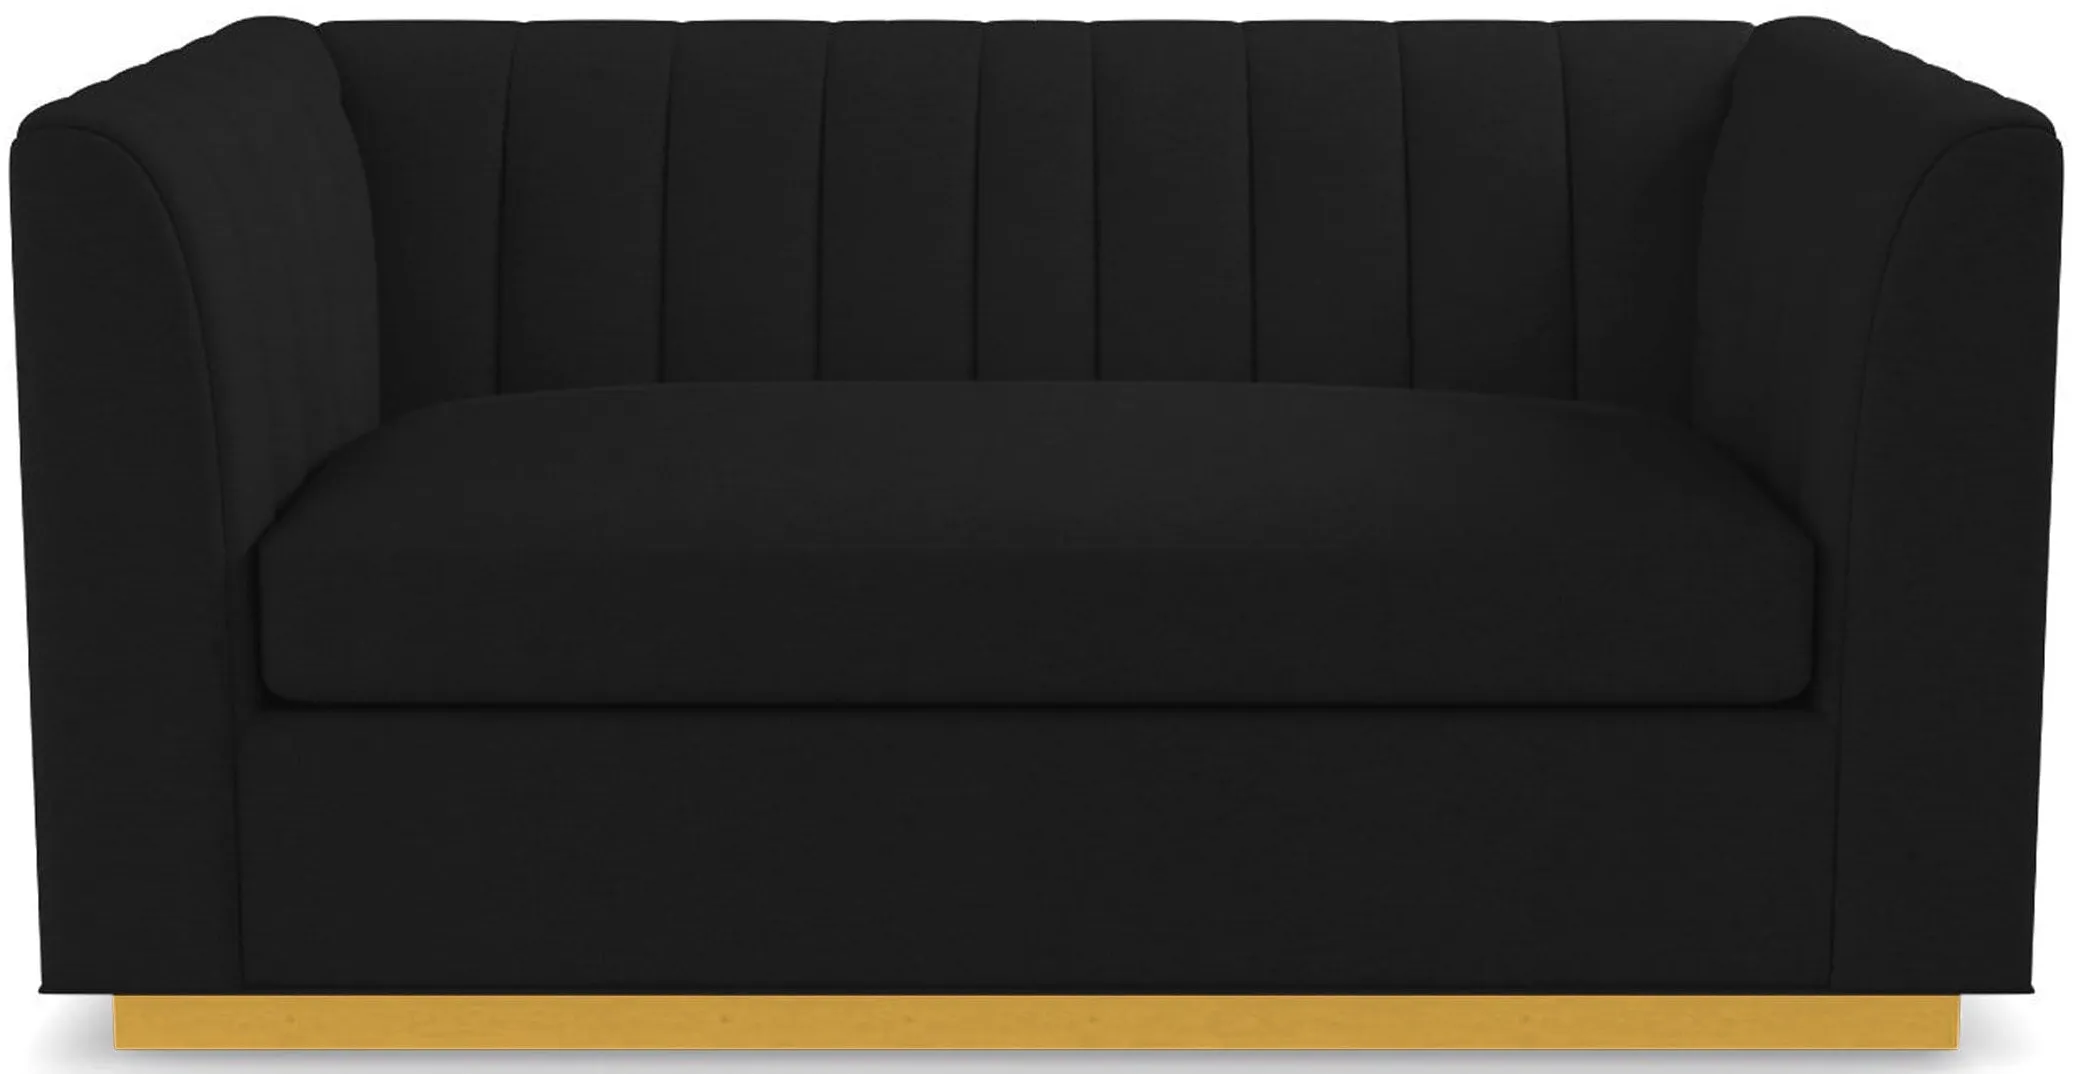 Nora Twin Size Sleeper Sofa Bed